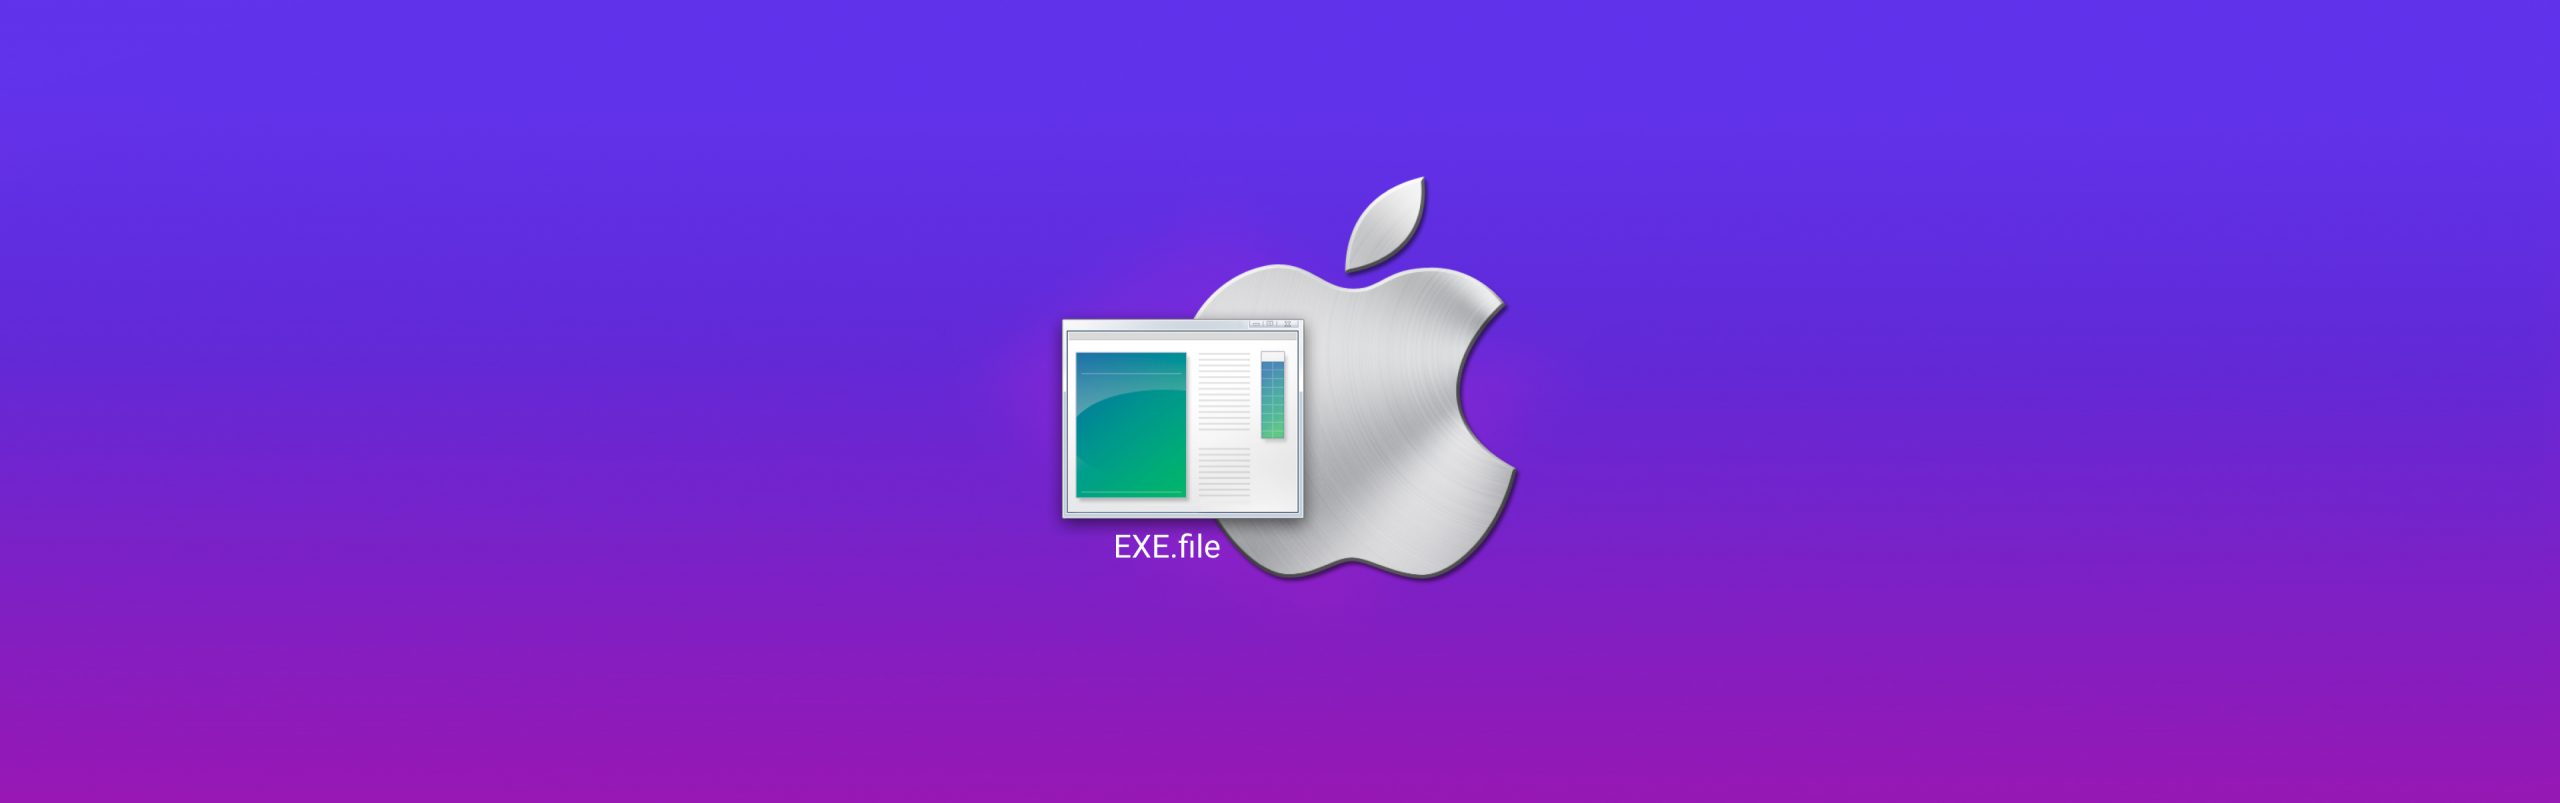 run exe file in wine for mac